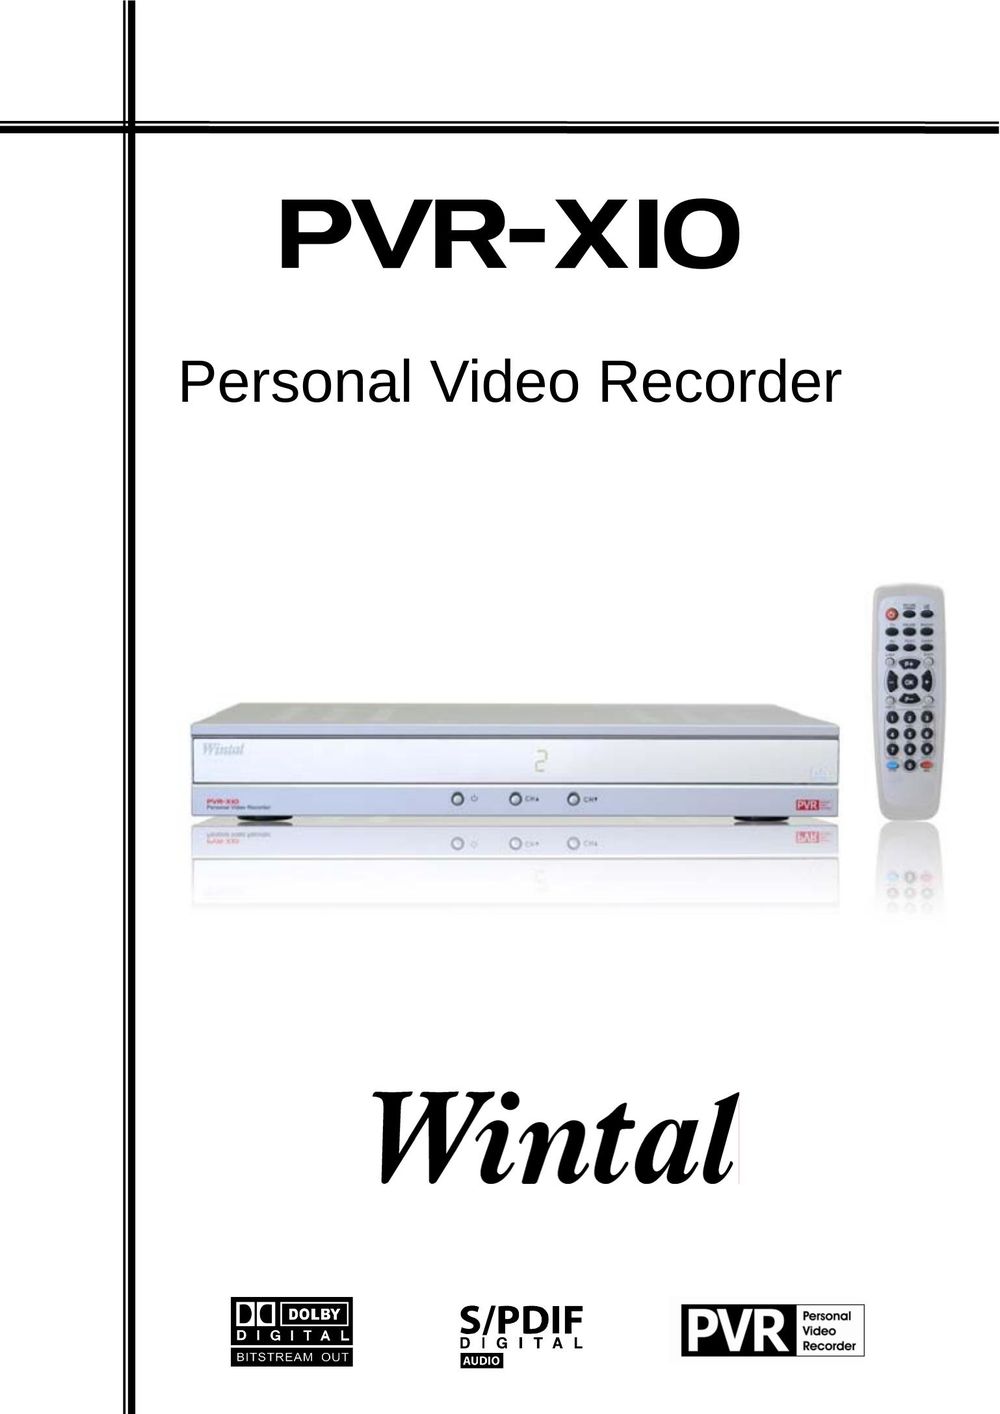 DreamGEAR PVR-X10 DVR User Manual